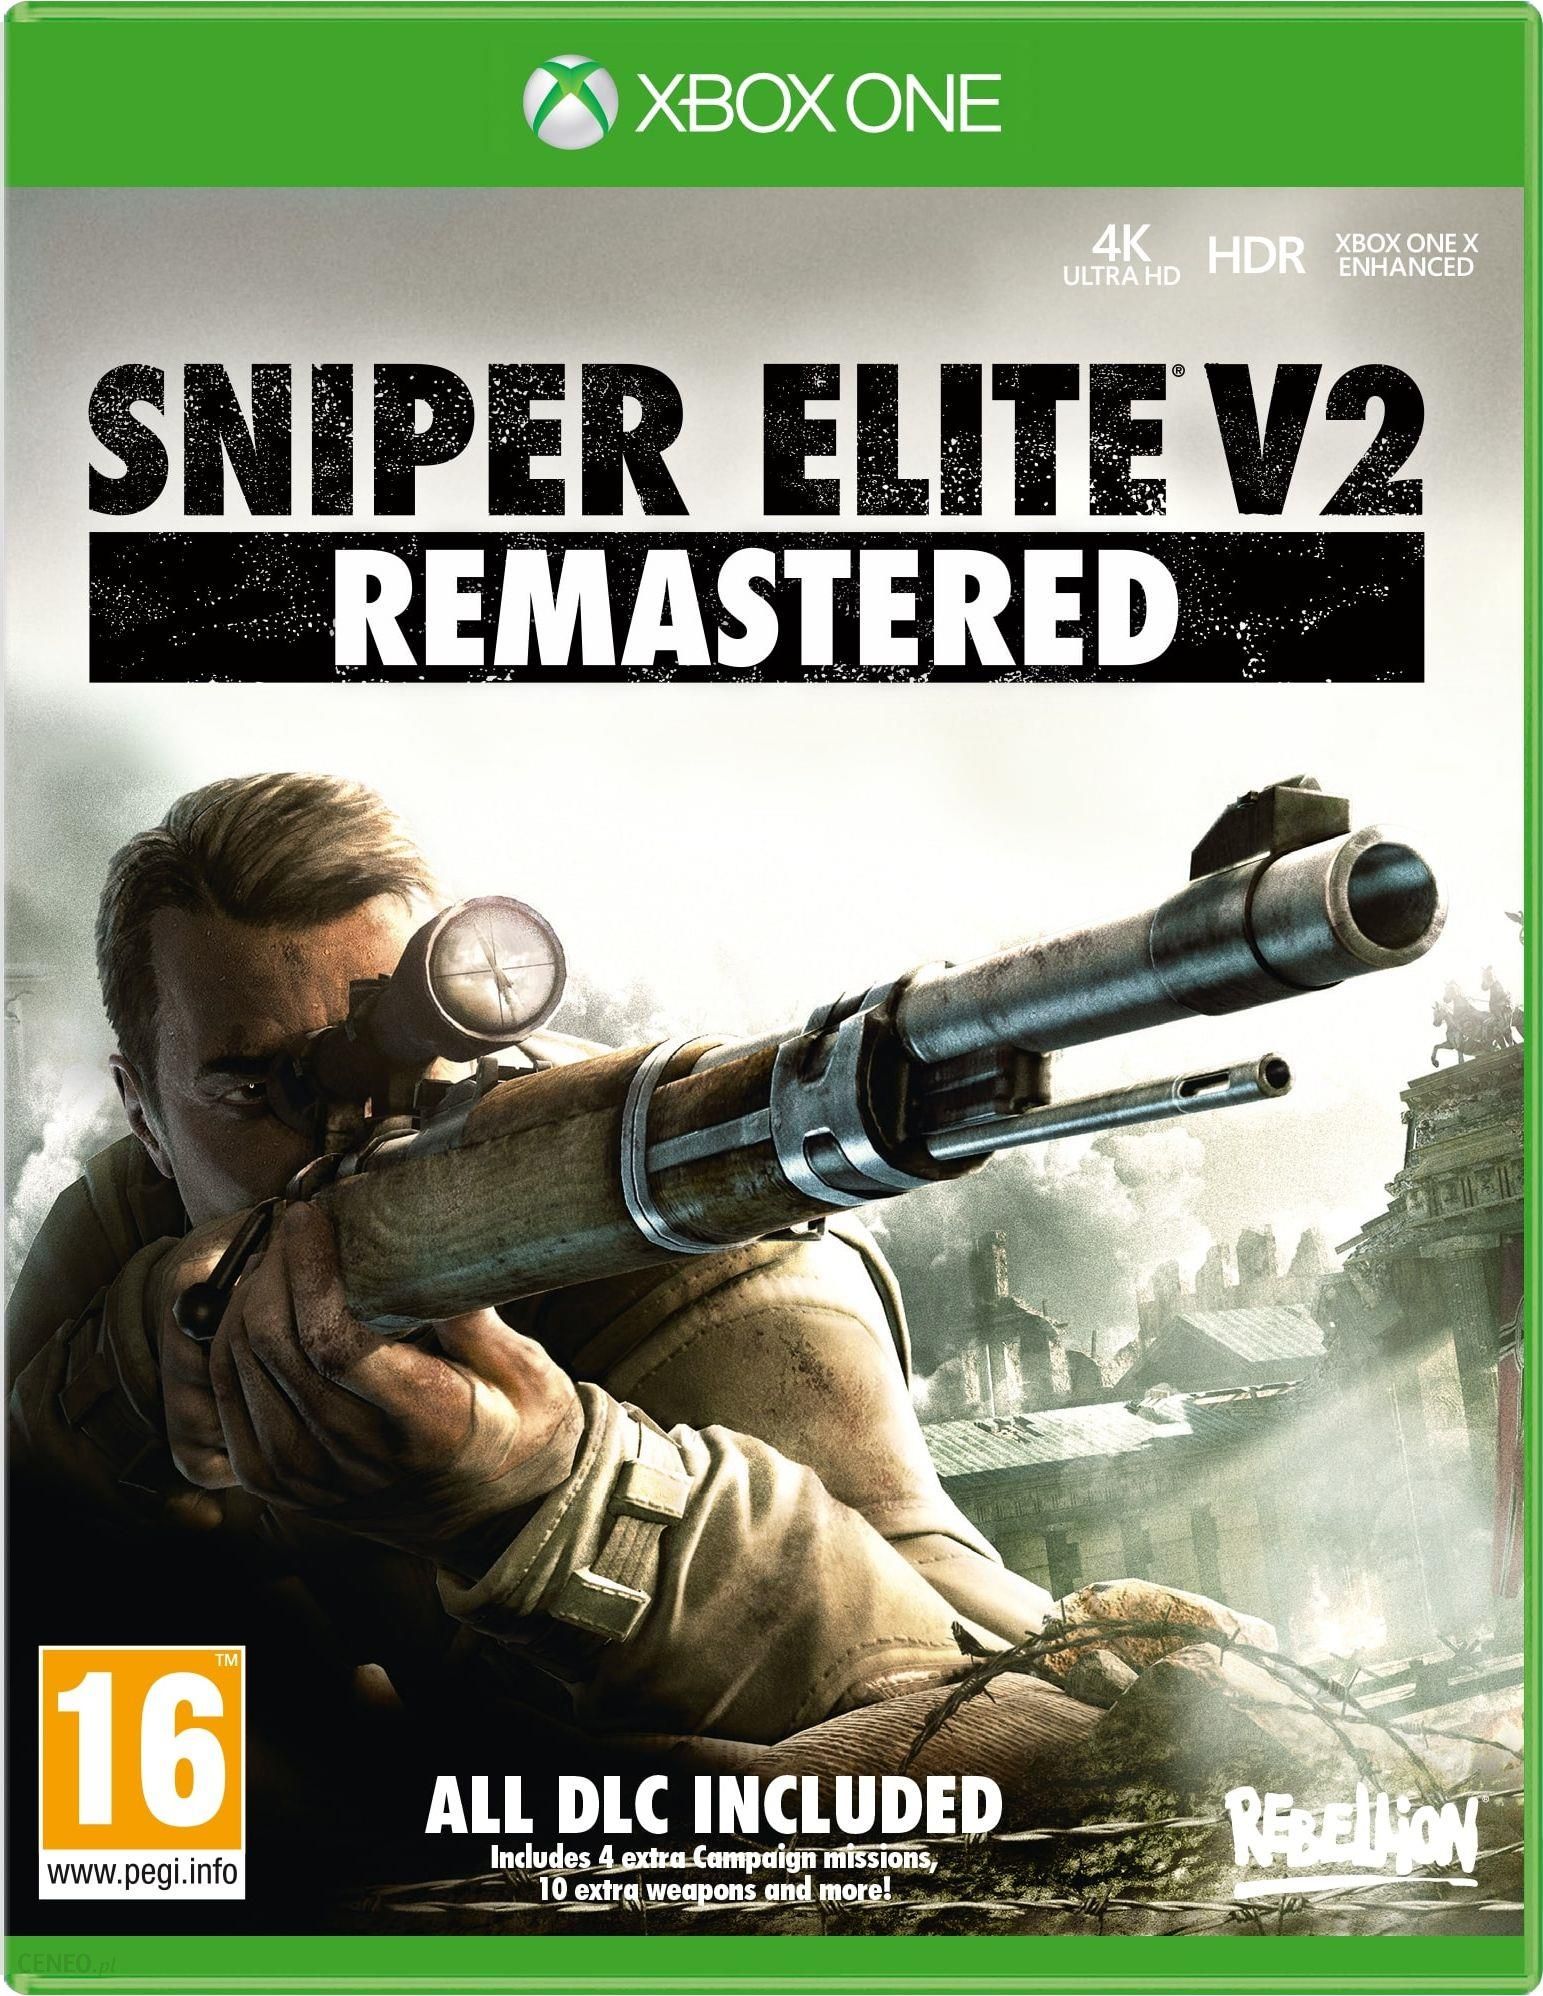 Sniper Elite V2 Remastered Pl Xbox One Od 129 00 Zl Ceny I Opinie Ceneo Pl